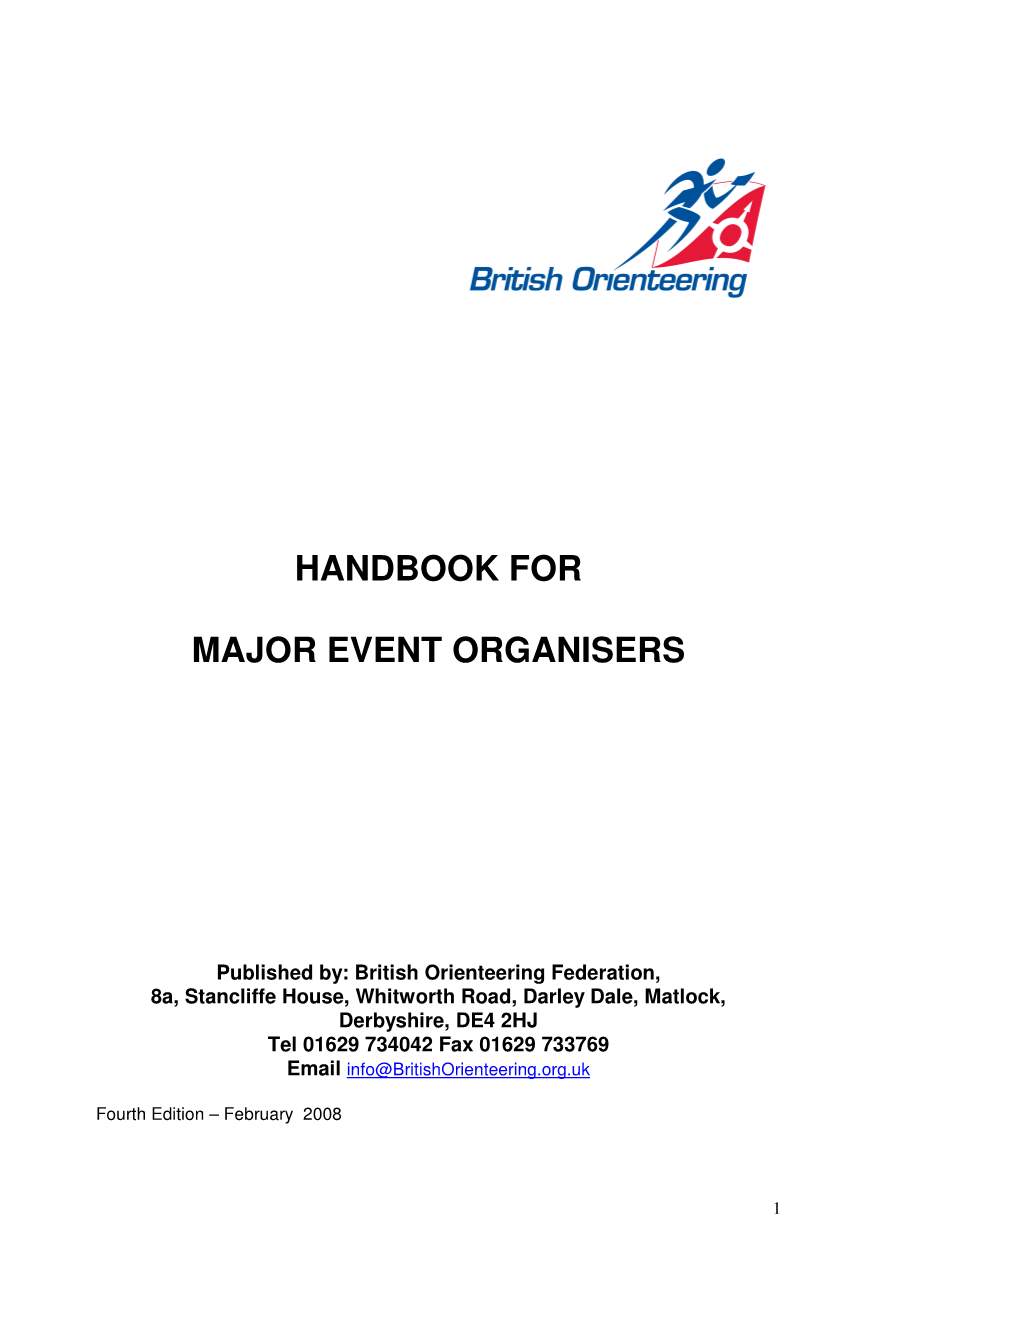 Handbook for Major Event Organisers